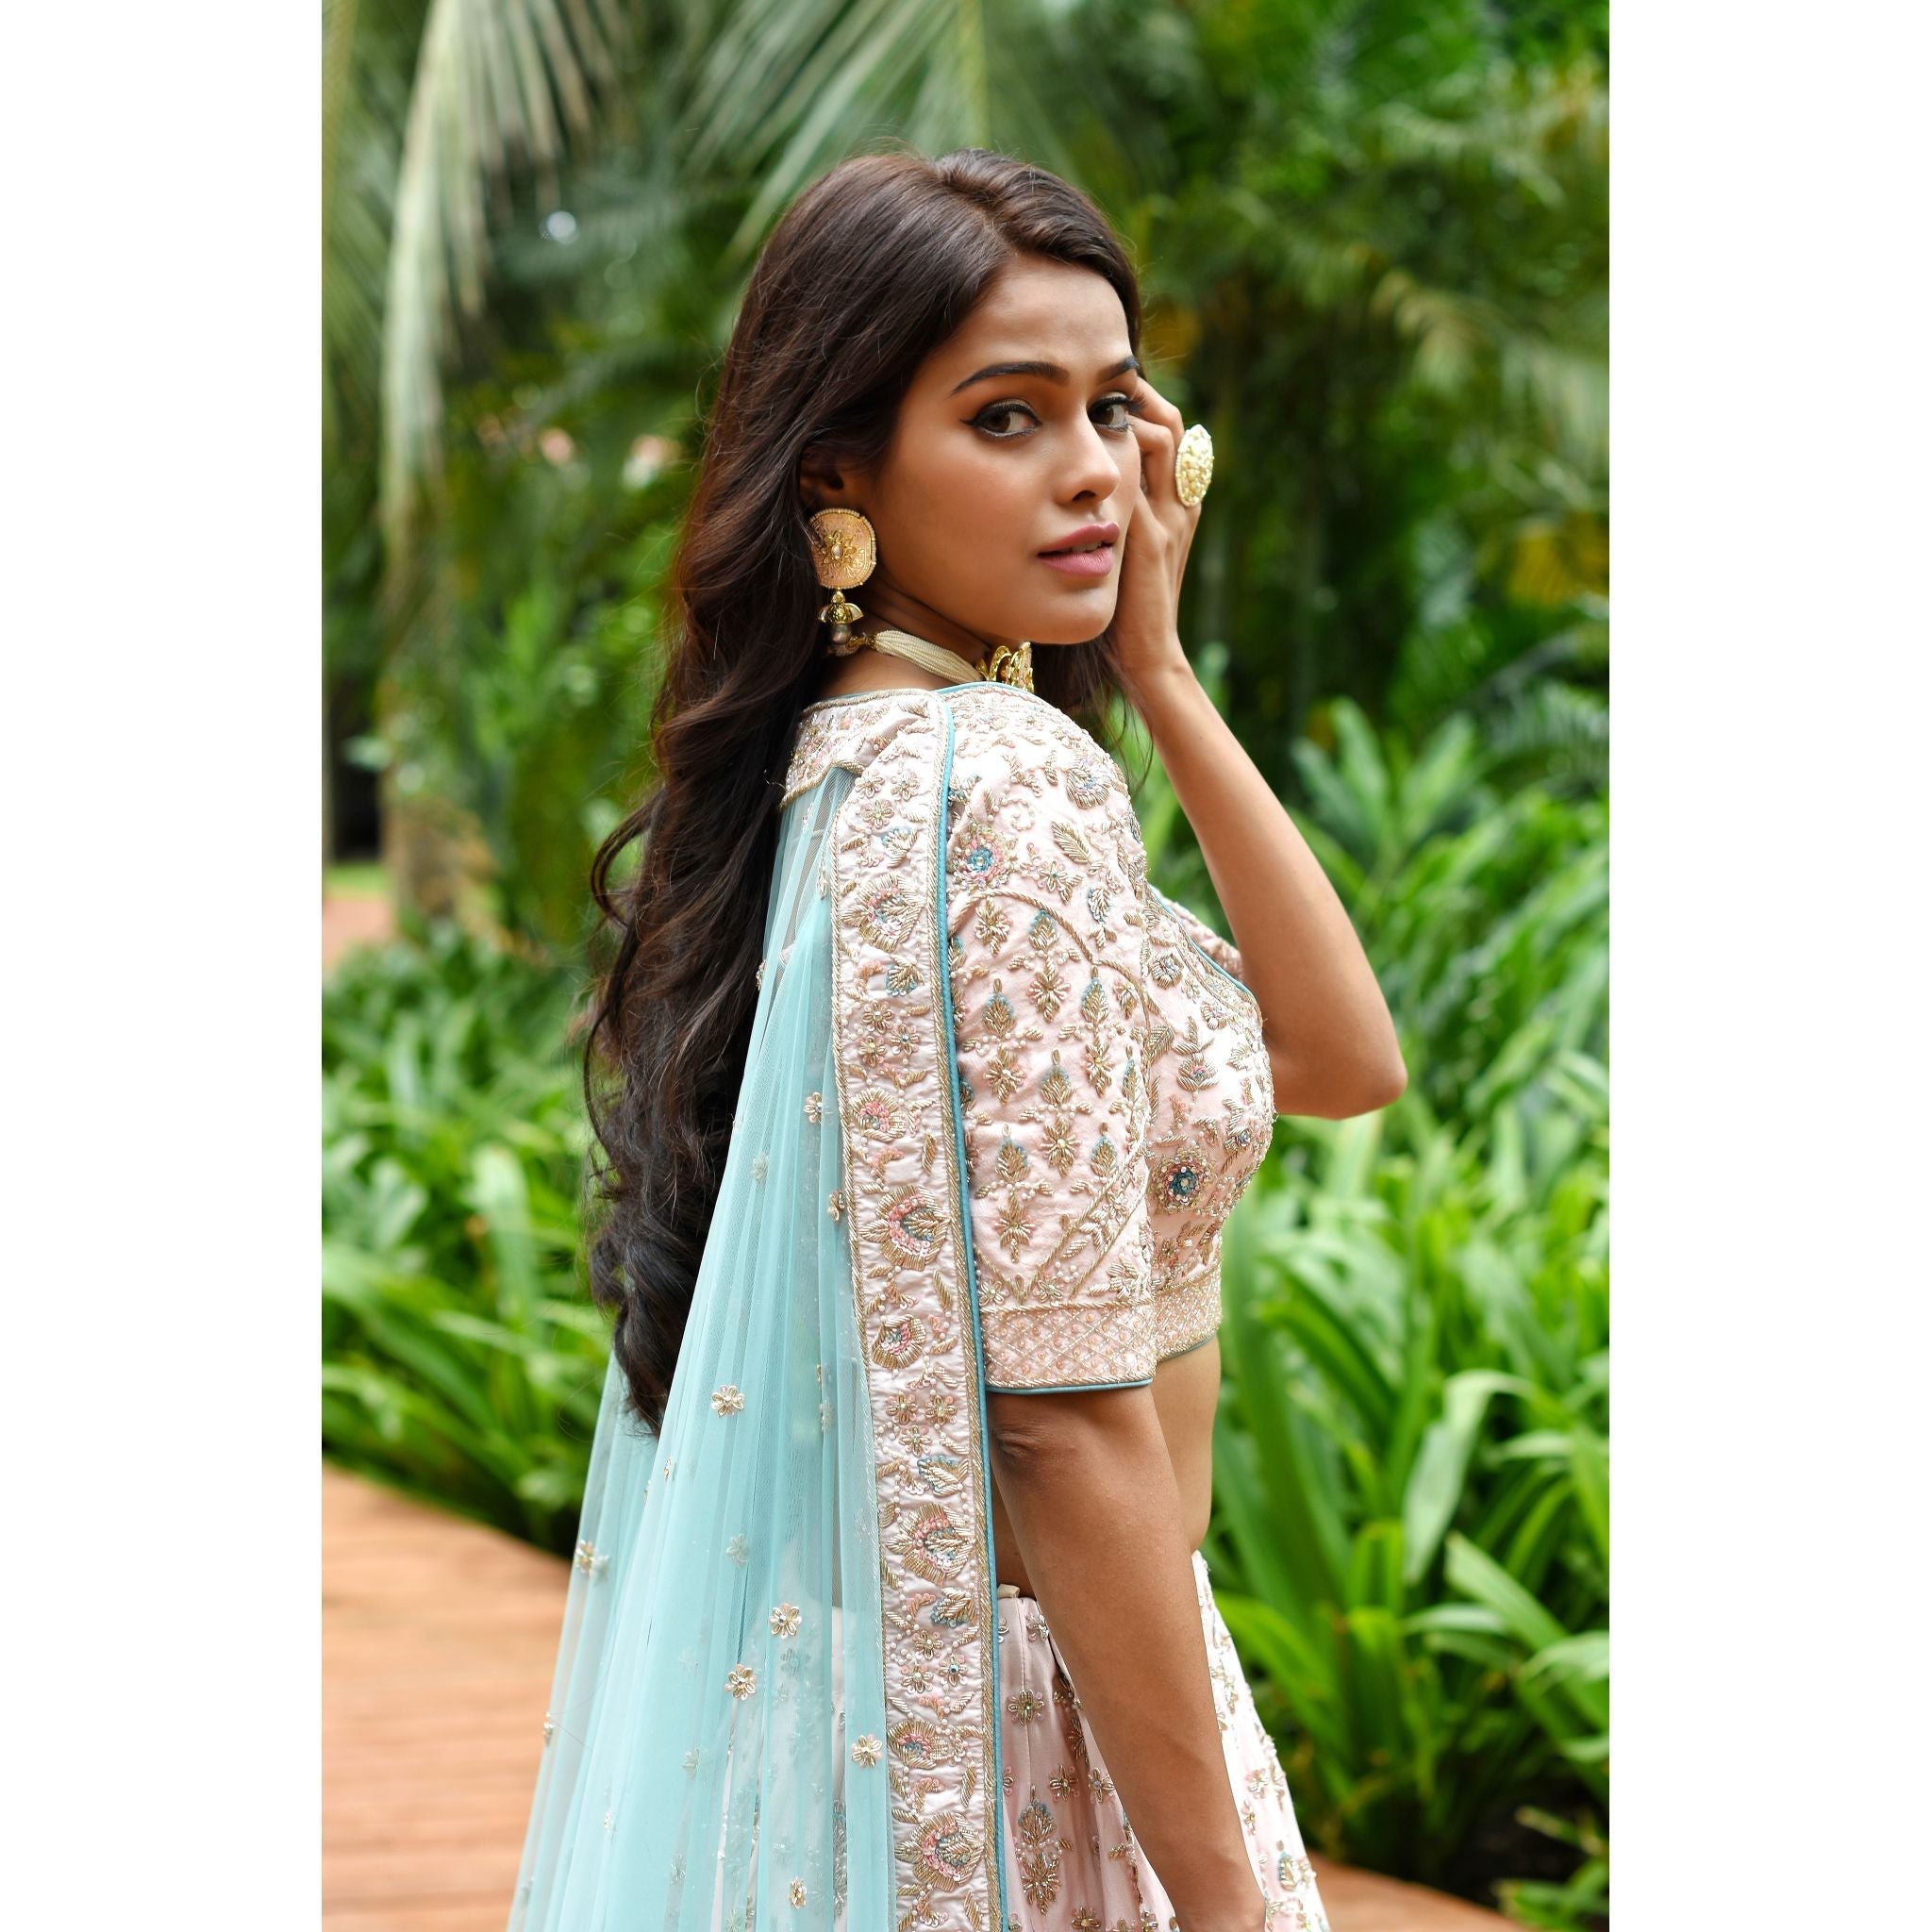 Pink and Aqua Lehenga Set - Indian Designer Bridal Wedding Outfit